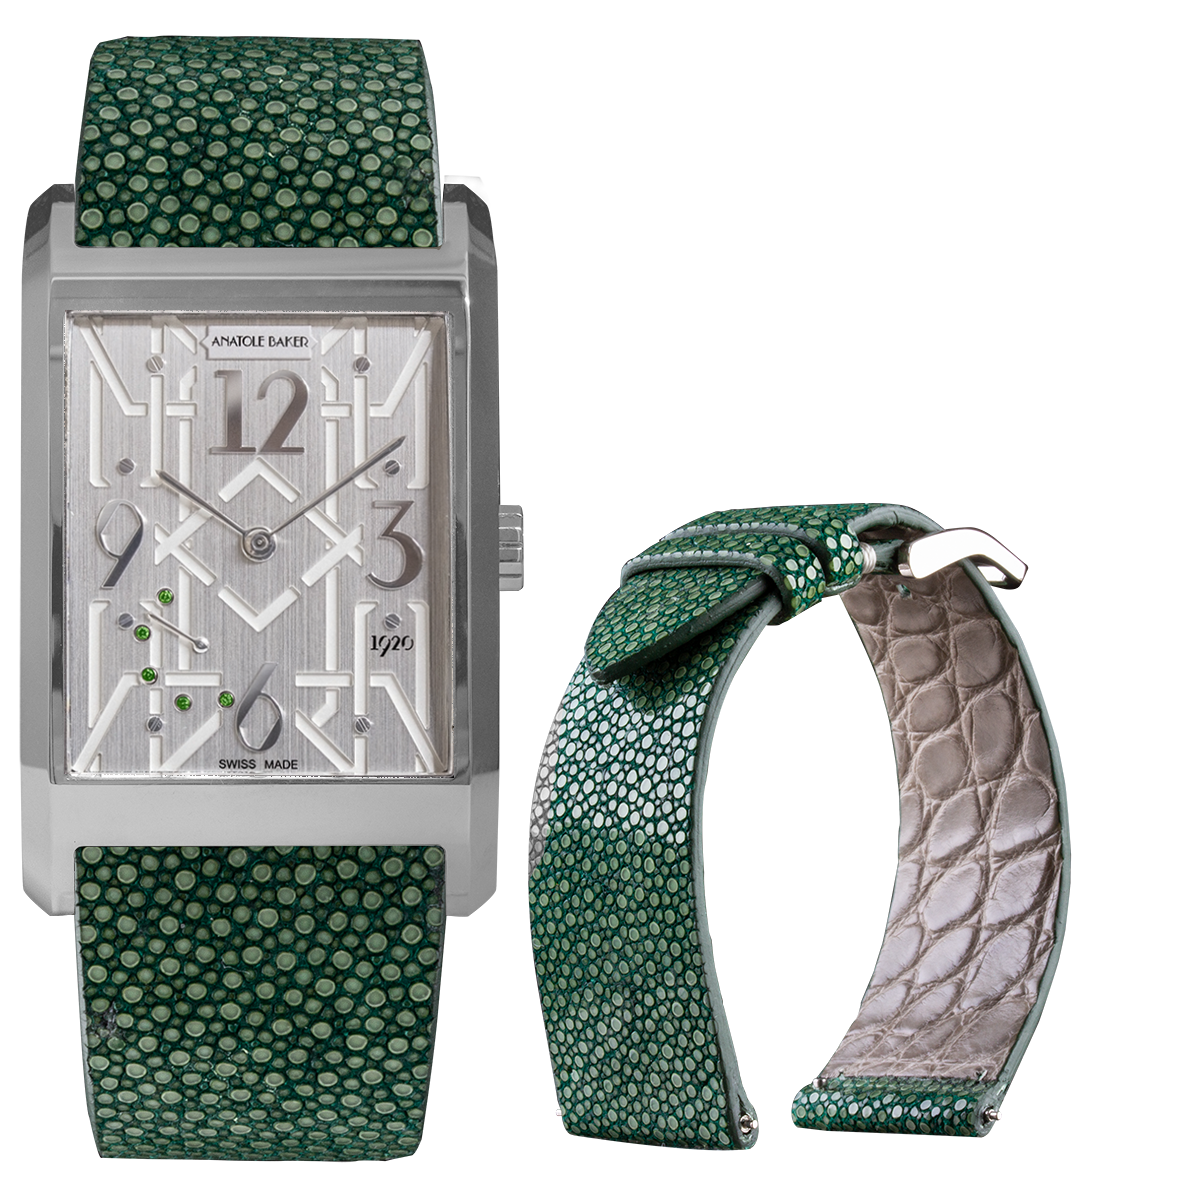 ANATOLE BAKER 1920 watch - Dandy green tsavorites - Green stingray 